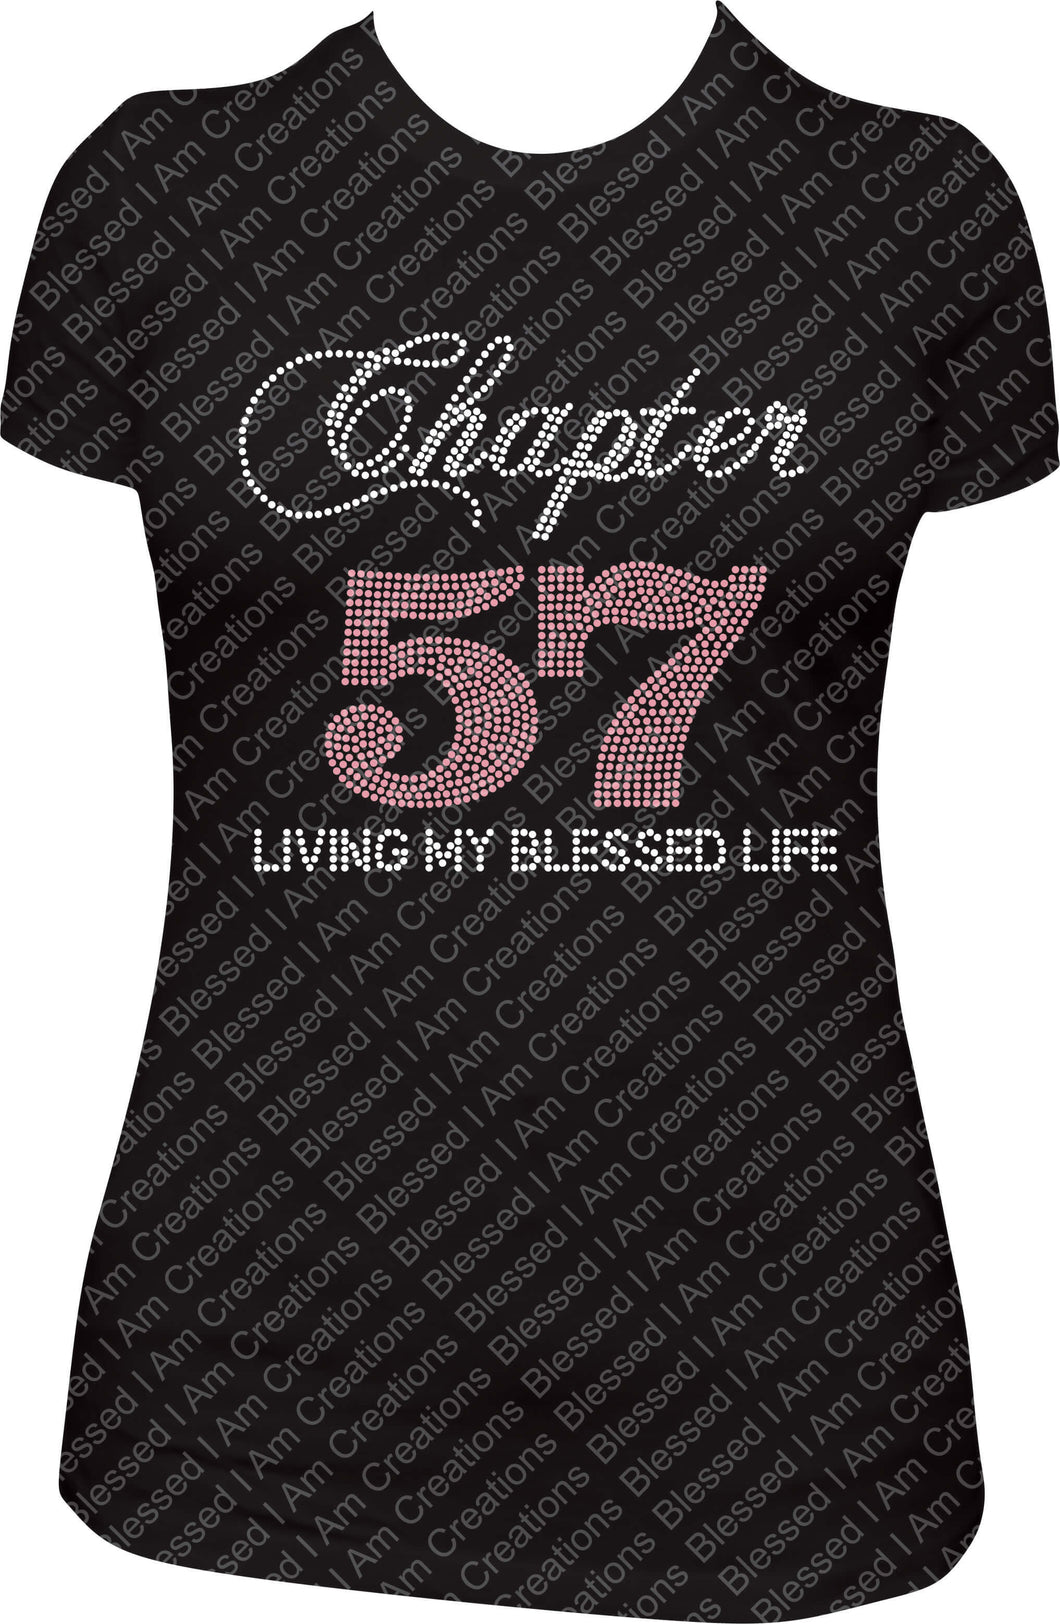 Chapter 57 Birthday Shirt, Chapter Shirt, Rhinestone Shirt, bling Shirt, Living my blessed life shirt, 57th birthday shirt, 57 birthday shirt, Birthday girl shirt